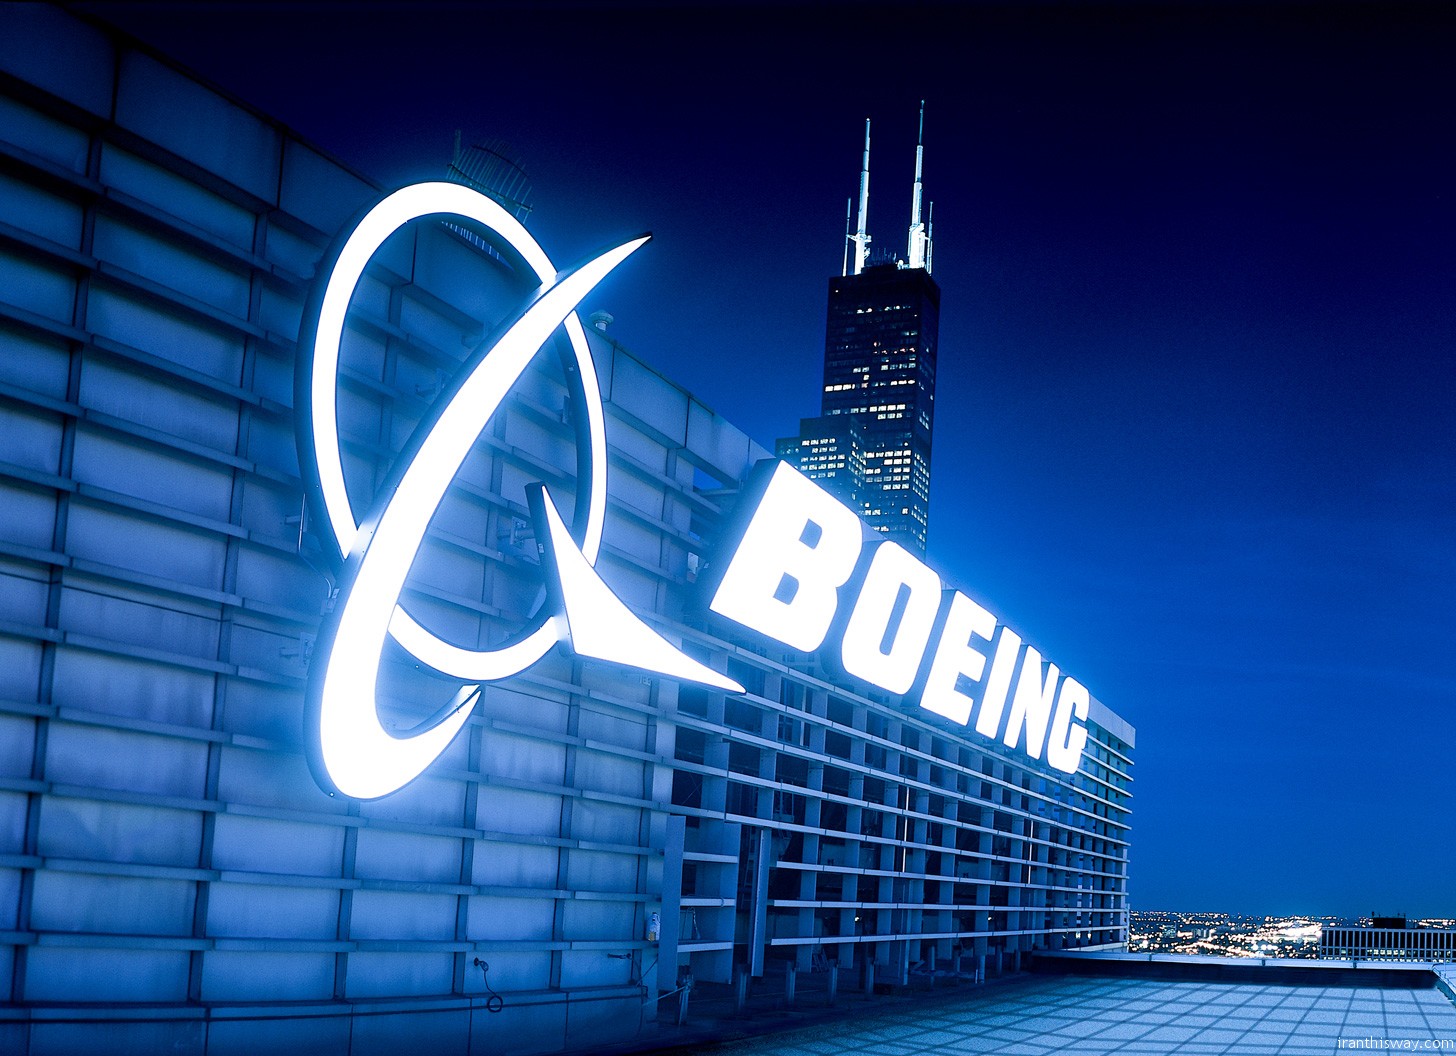 Iran’s Qeshm Air in talks with Boeing